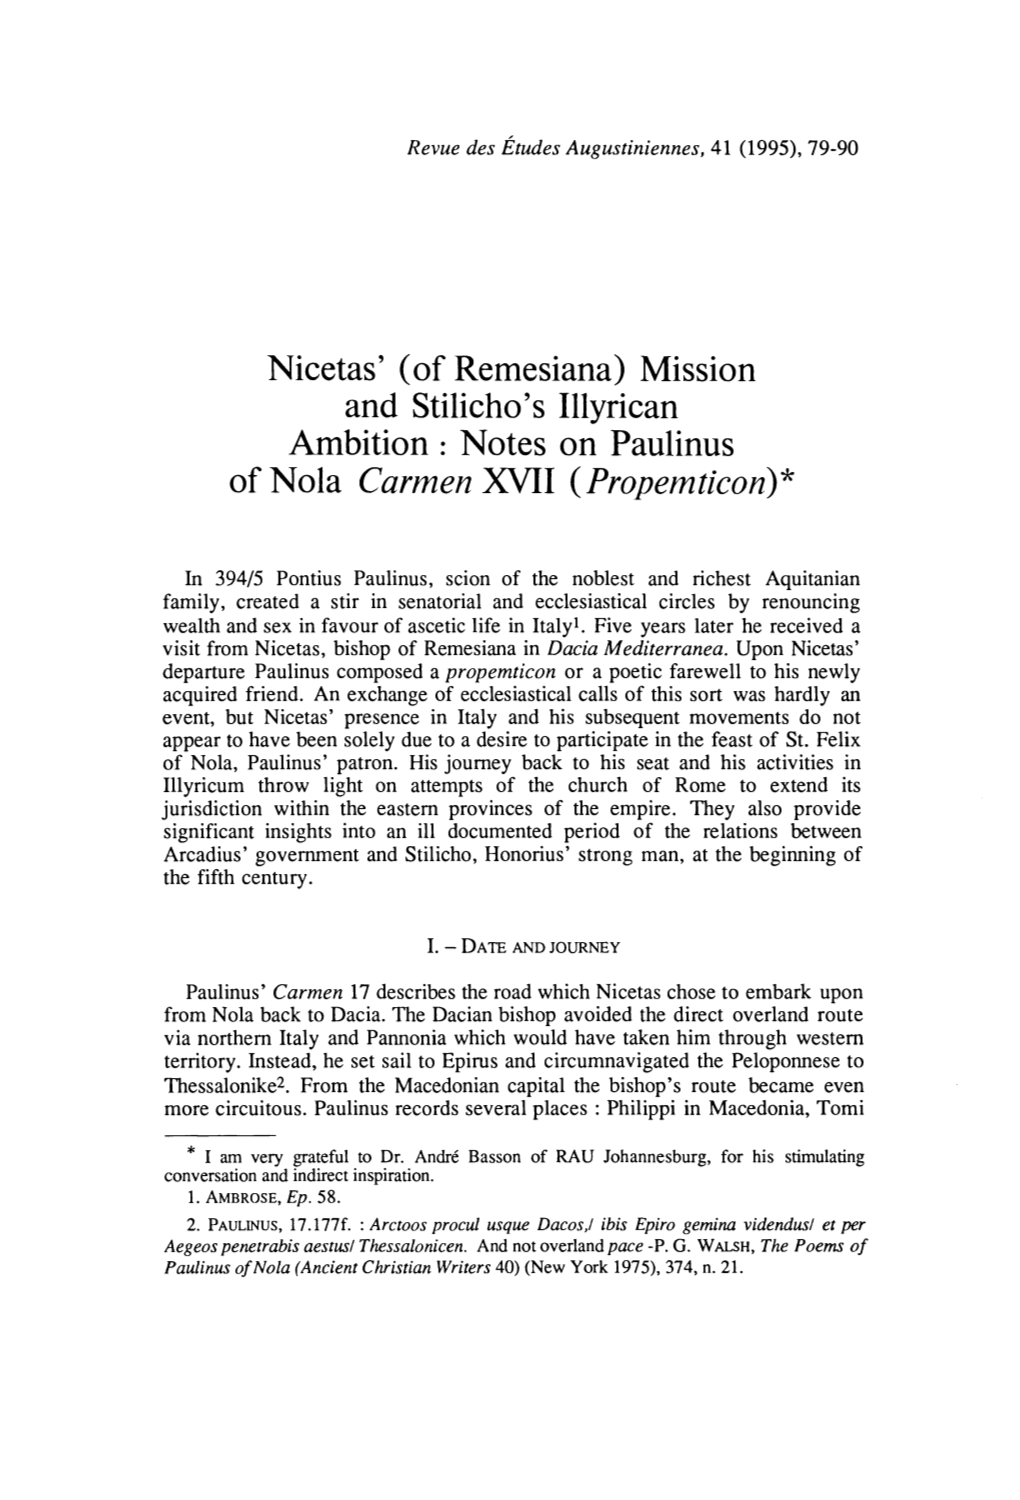 Nicetas' (Of Remesiana) Mission and Stilicho's Illyrican Ambition : Notes on Paulinus of Nola Carmen XVII (Propemticorì)*